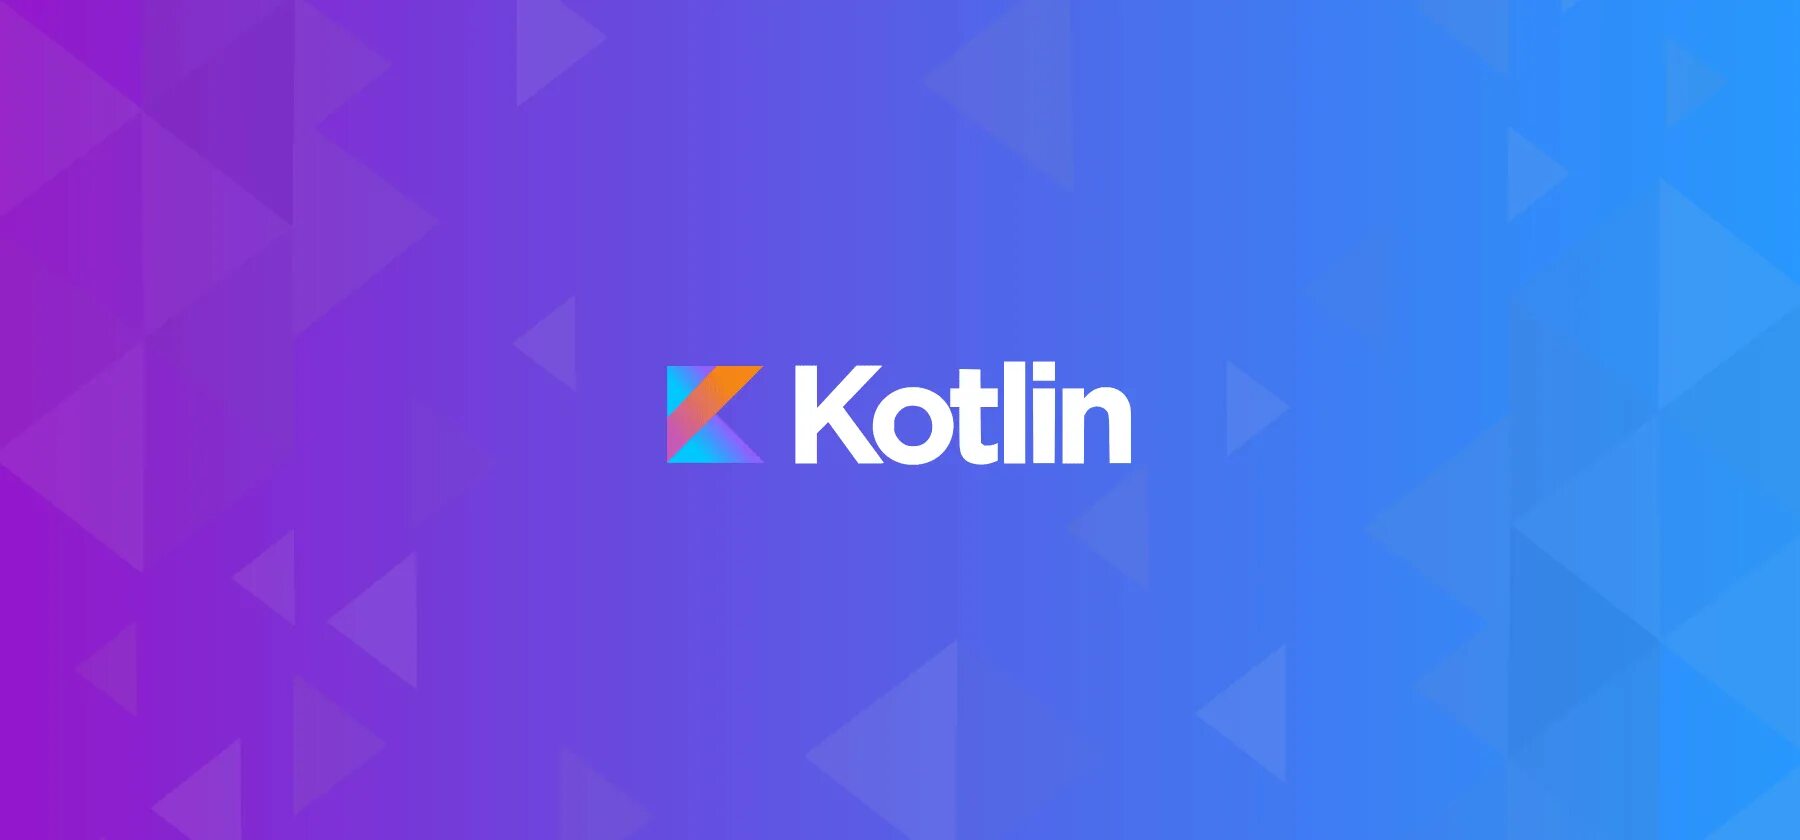 Kotlin libraries. Котлин язык программирования. Kotlin логотип. Kotlin язык программирования логотип. Программирование Kotlin.